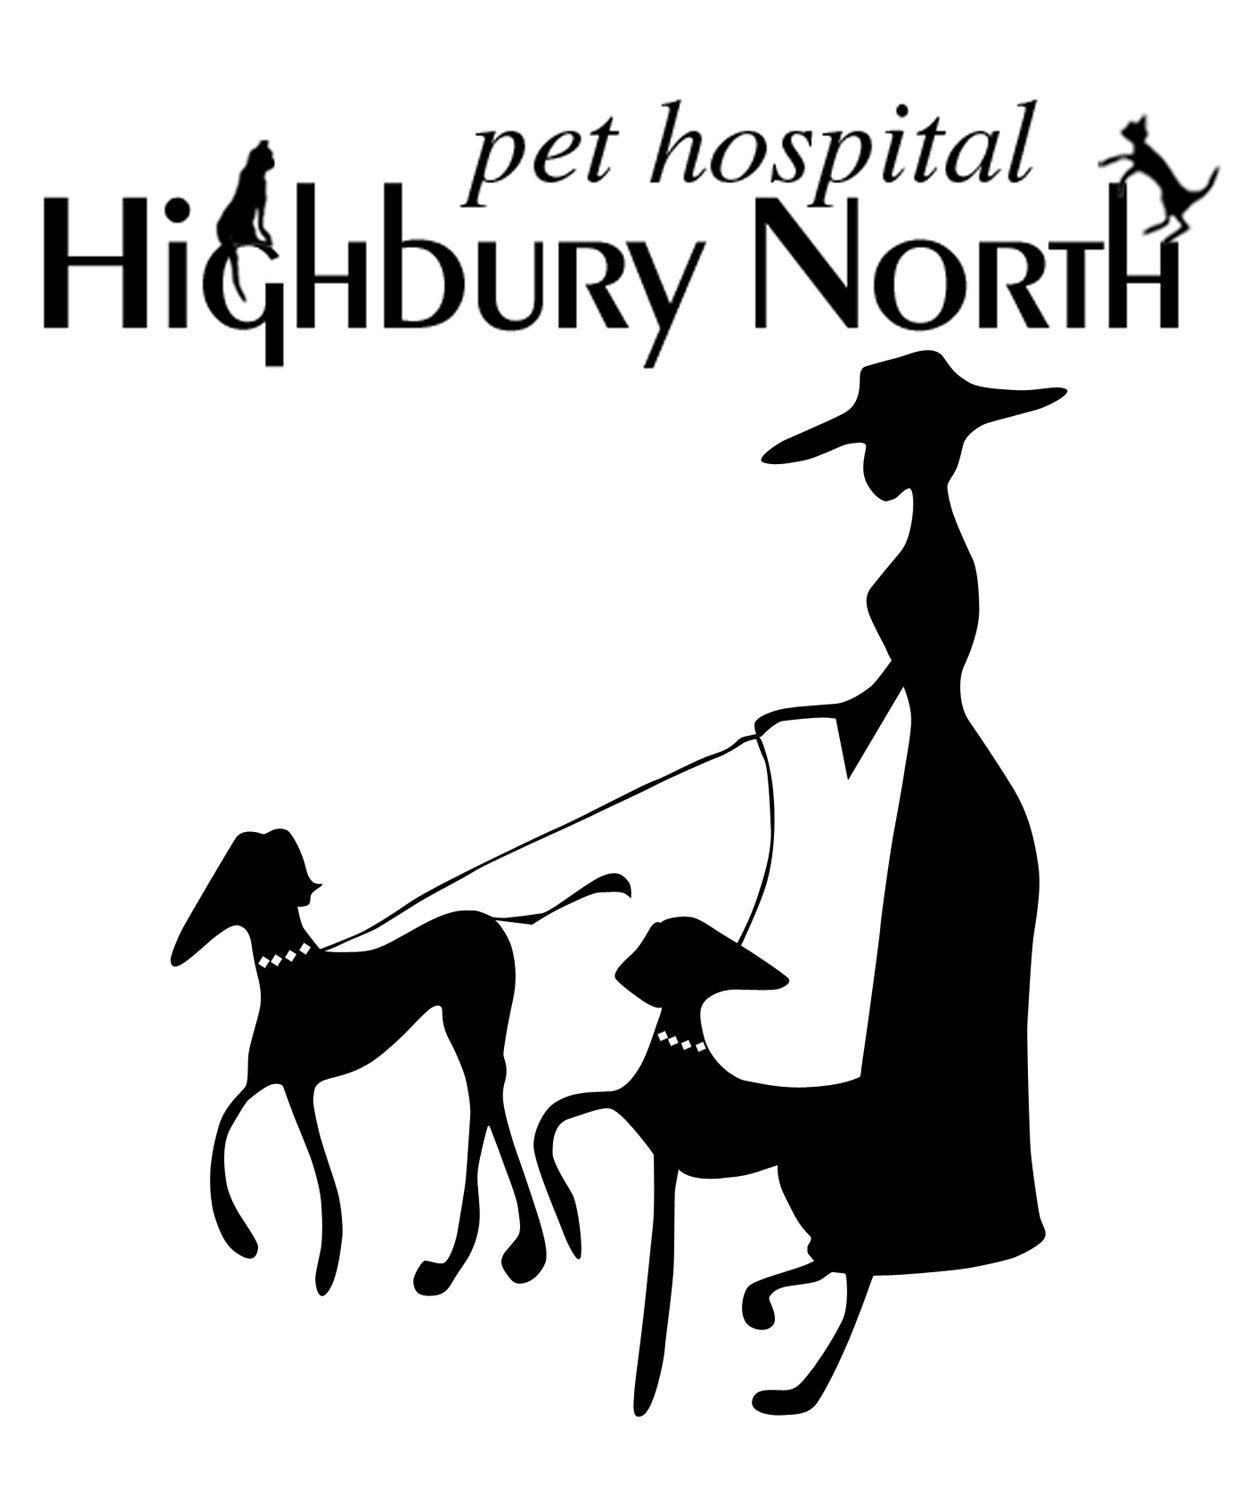 HIGHBURY NORTH PET HOSPITAL